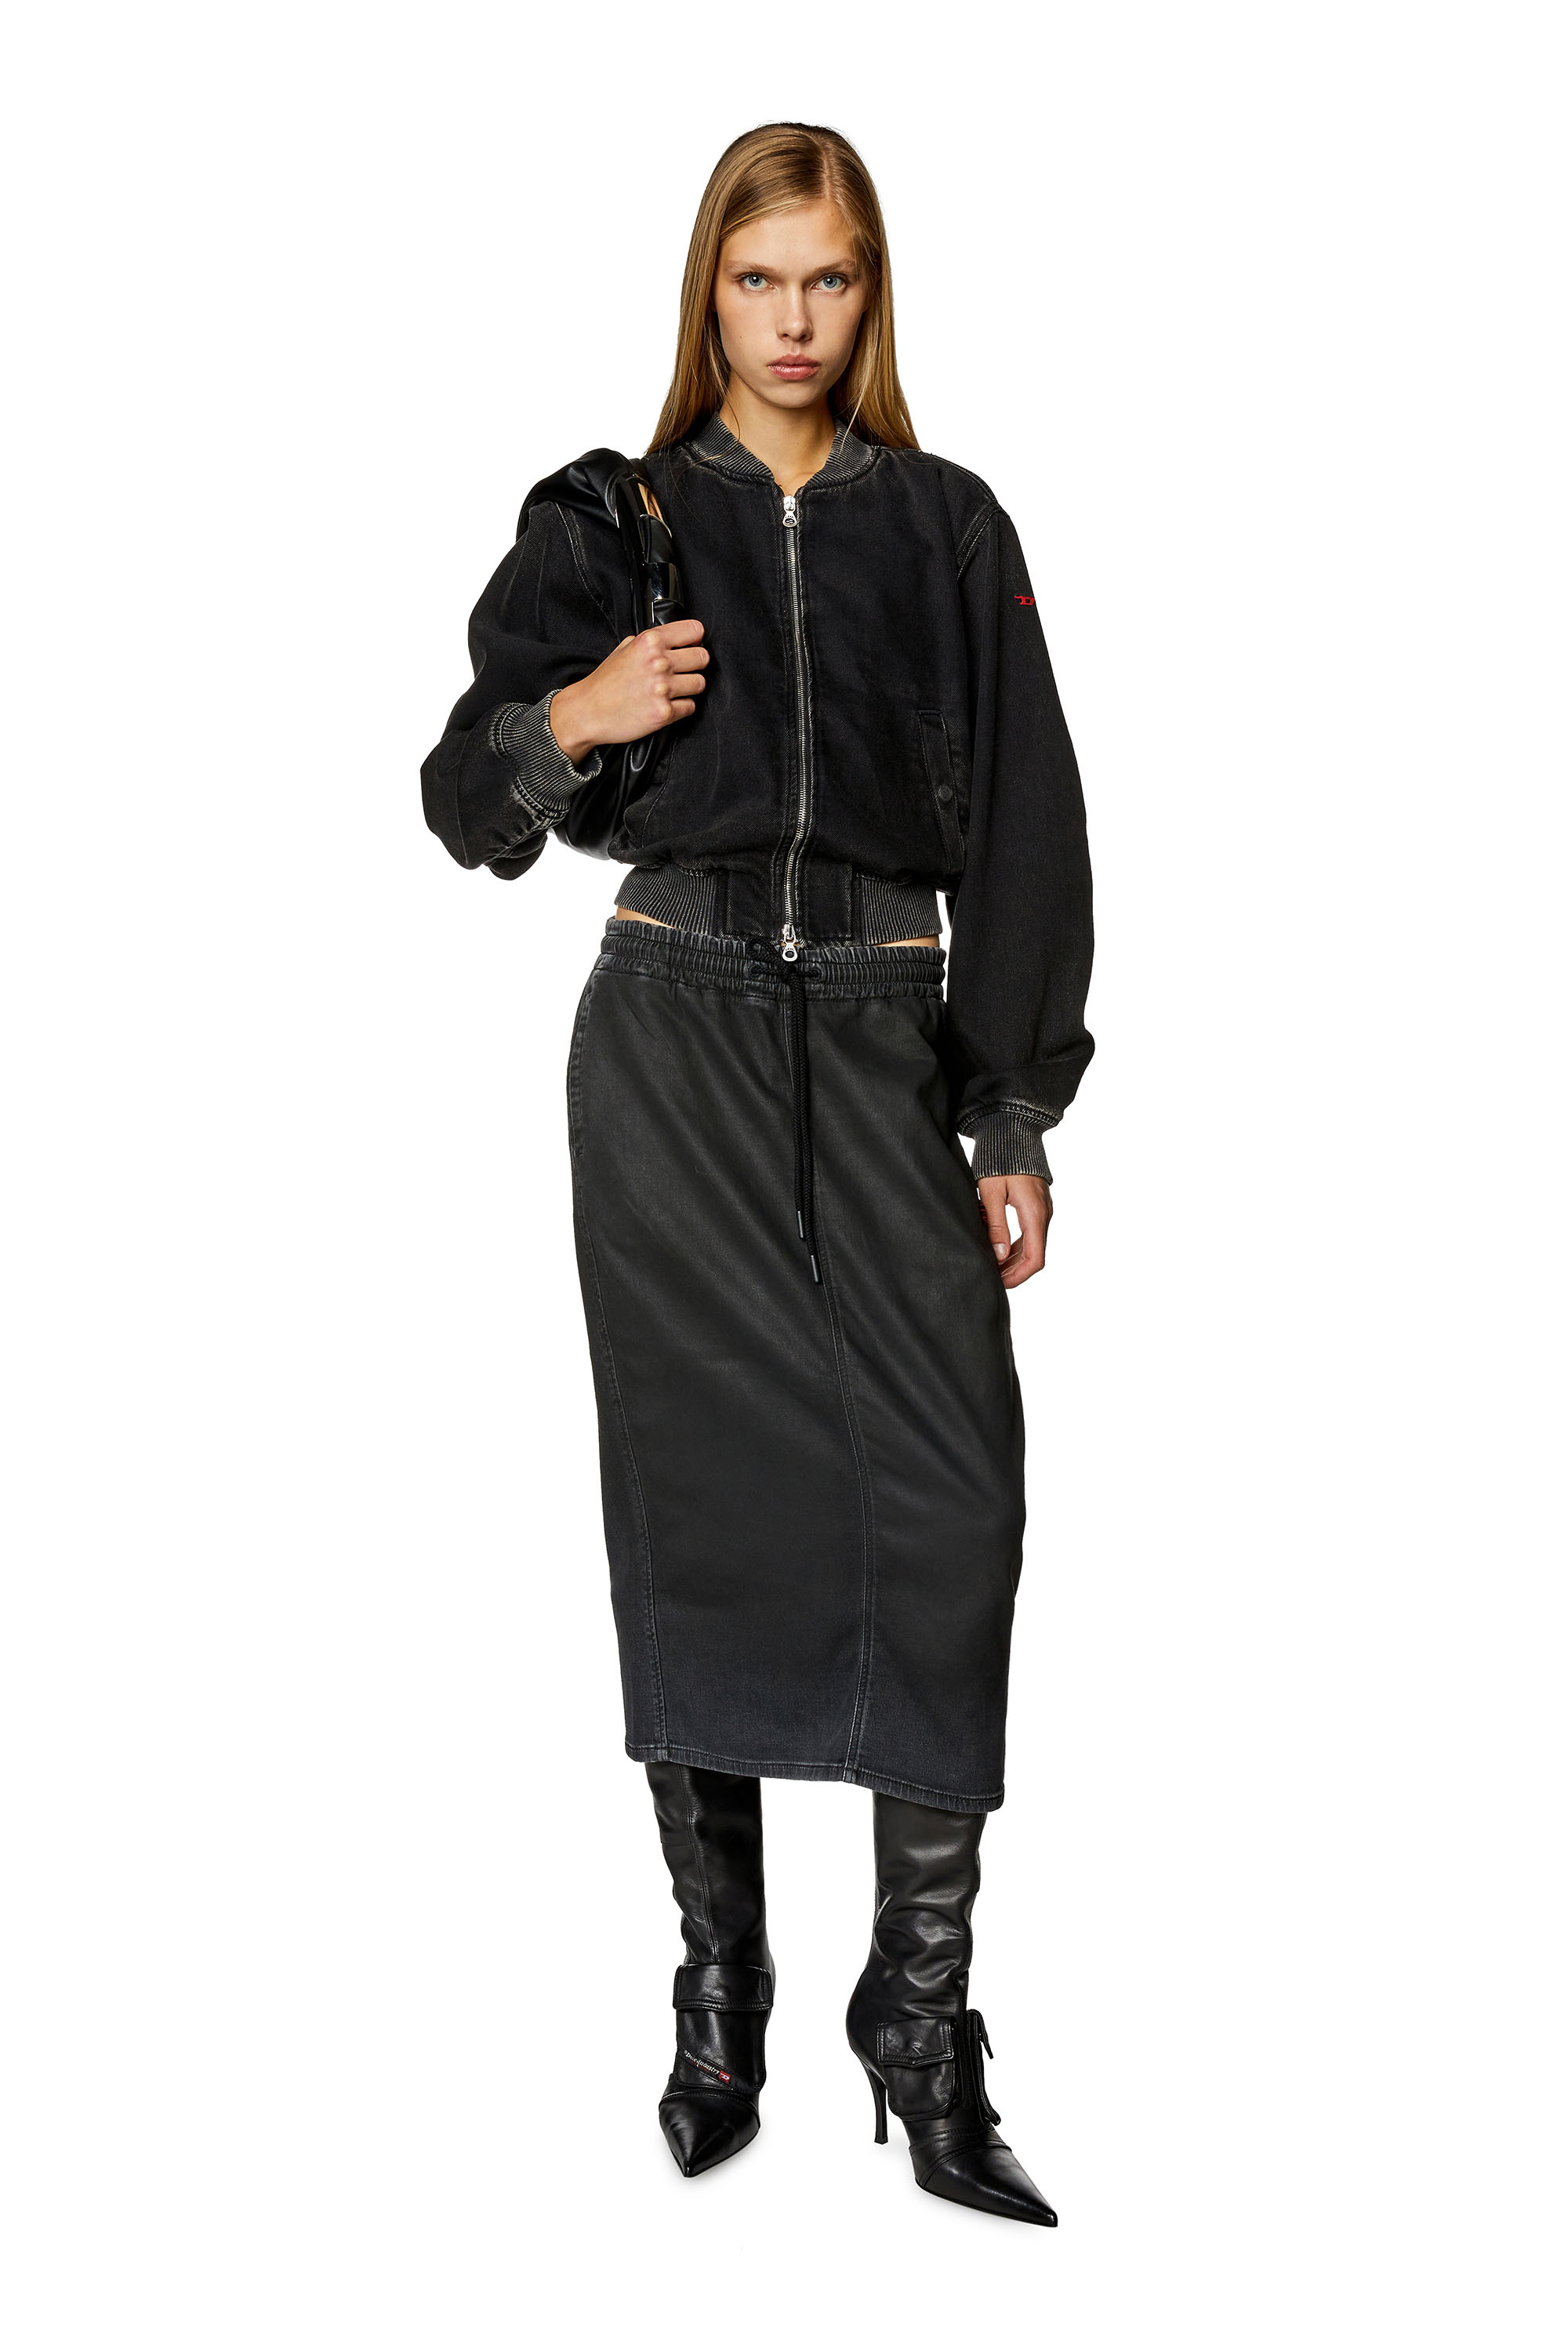 Diesel - DE-OREN JOGG, Woman Skirt in coated denim in Black - Image 2